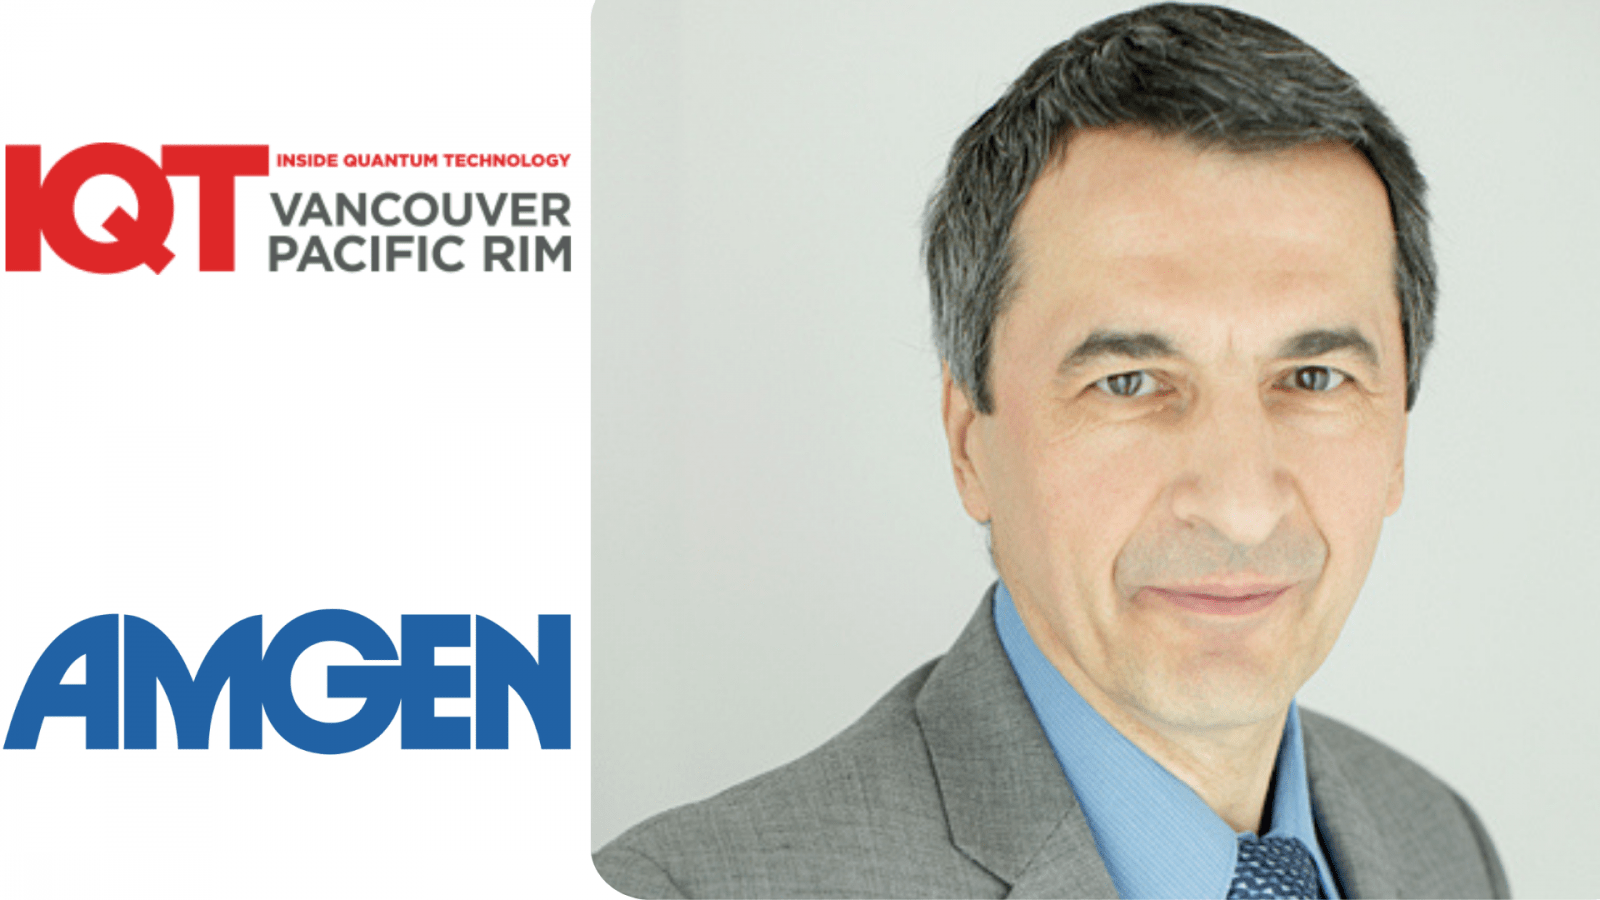 Zoran Krunic ผู้จัดการอาวุโสฝ่ายวิทยาศาสตร์ข้อมูลที่ Amgen เป็นวิทยากร IQT Vancouver/Pacific Rim ปี 2024 - Inside Quantum Technology